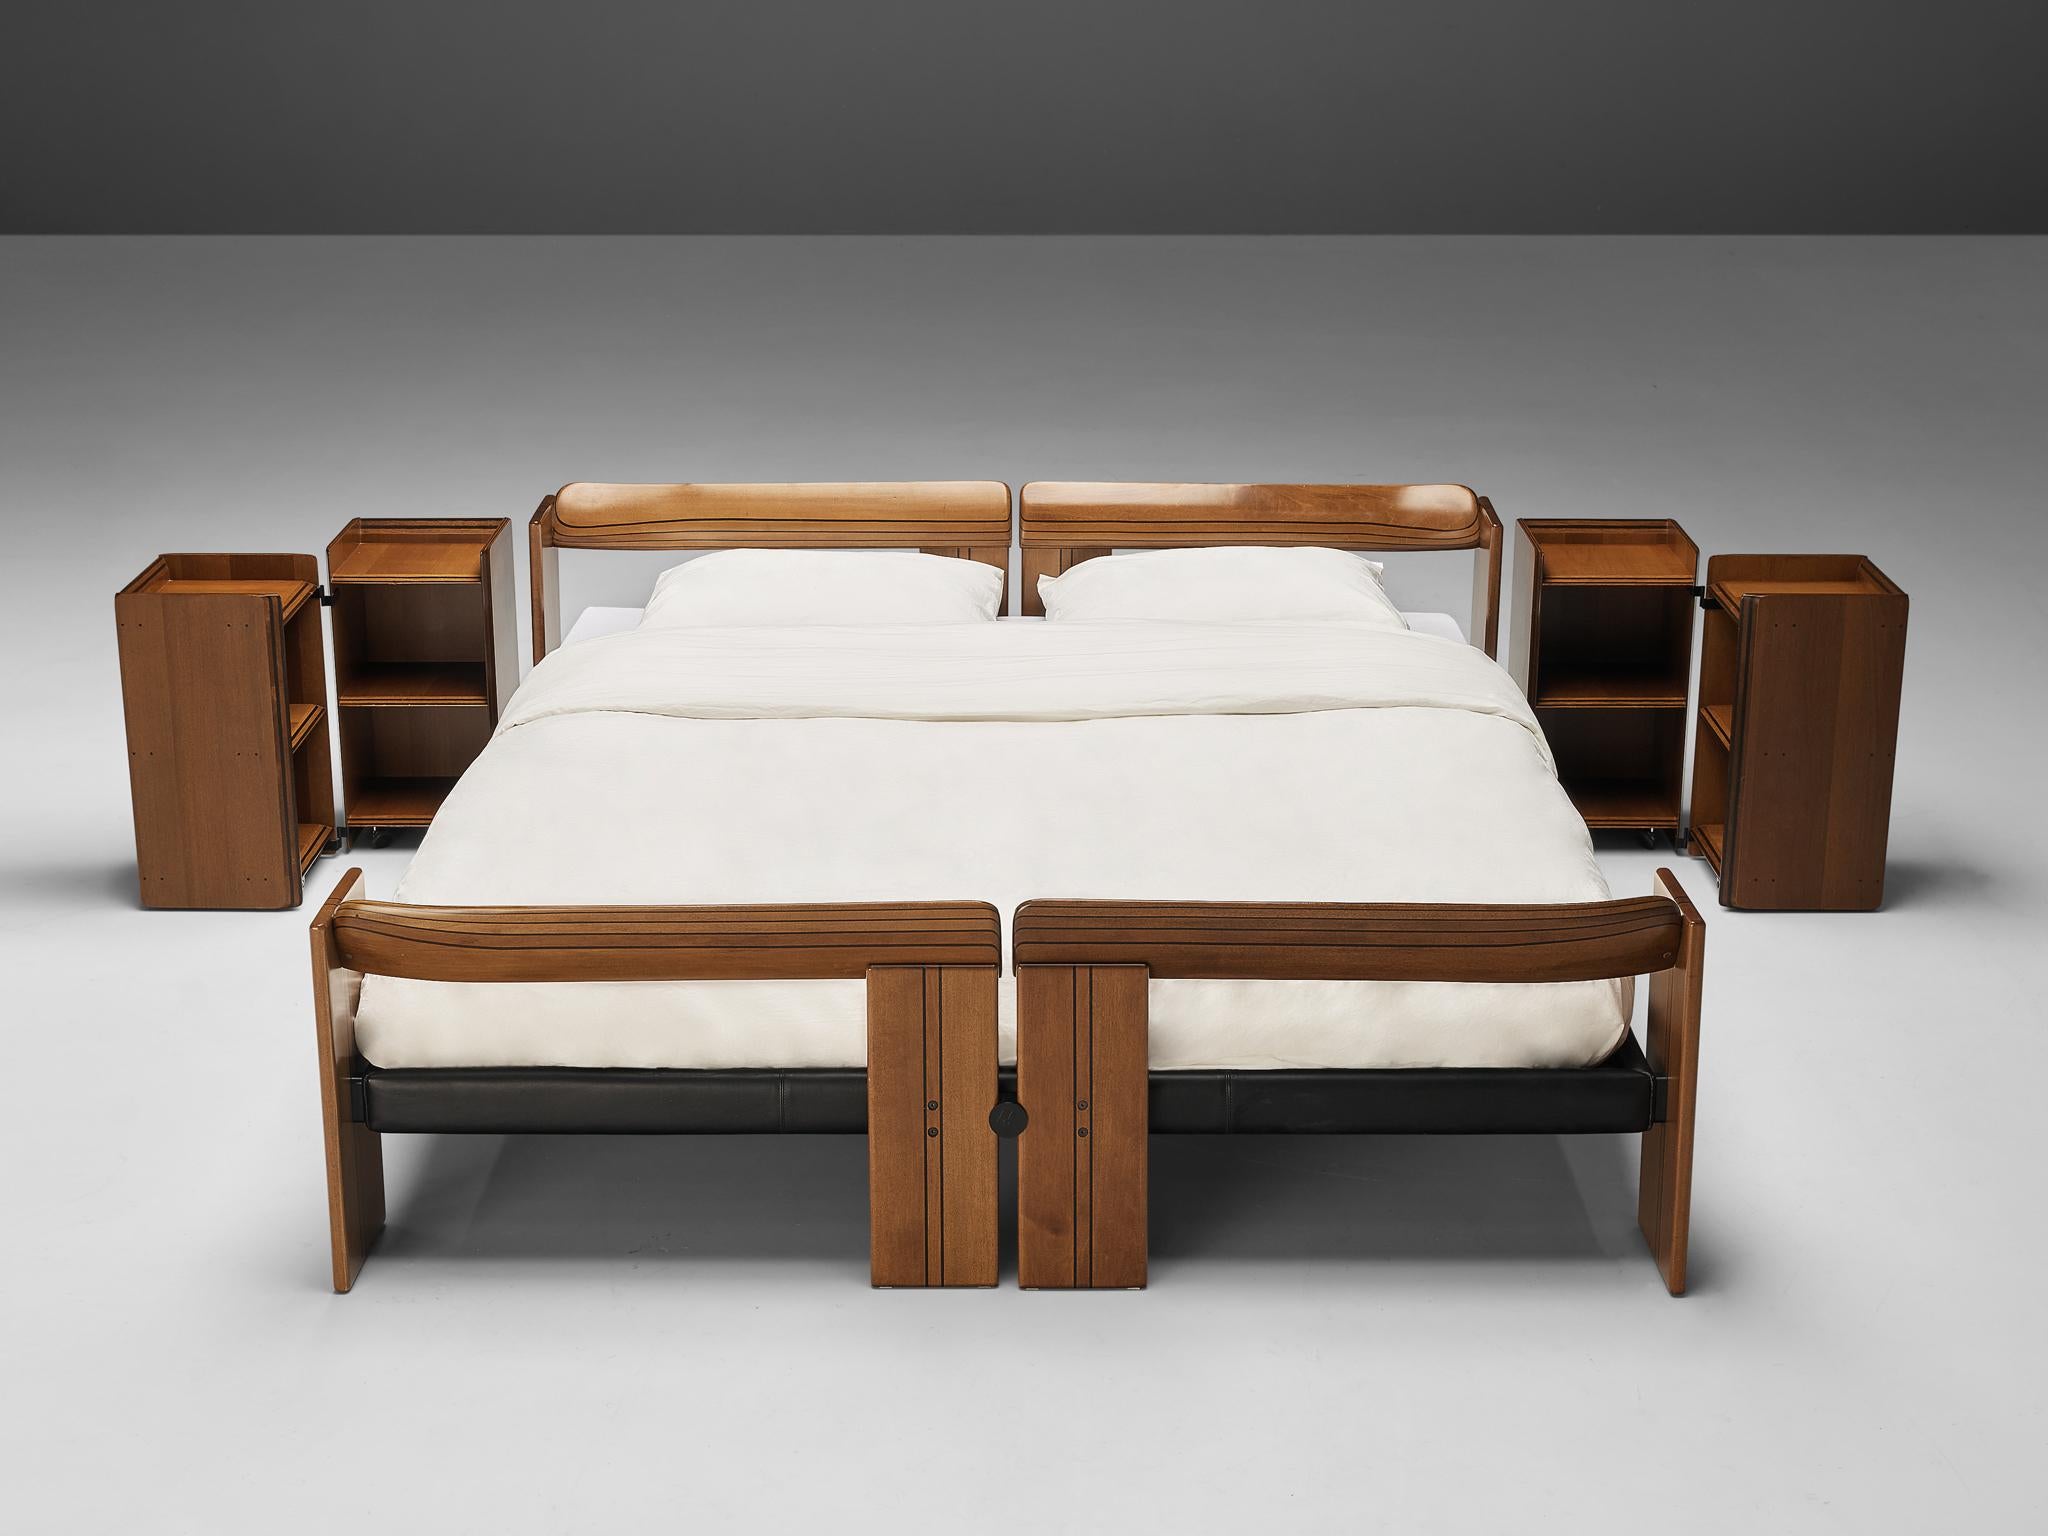 Italian Afra & Tobia Scarpa 'Artona' Double Bed with Nightstands